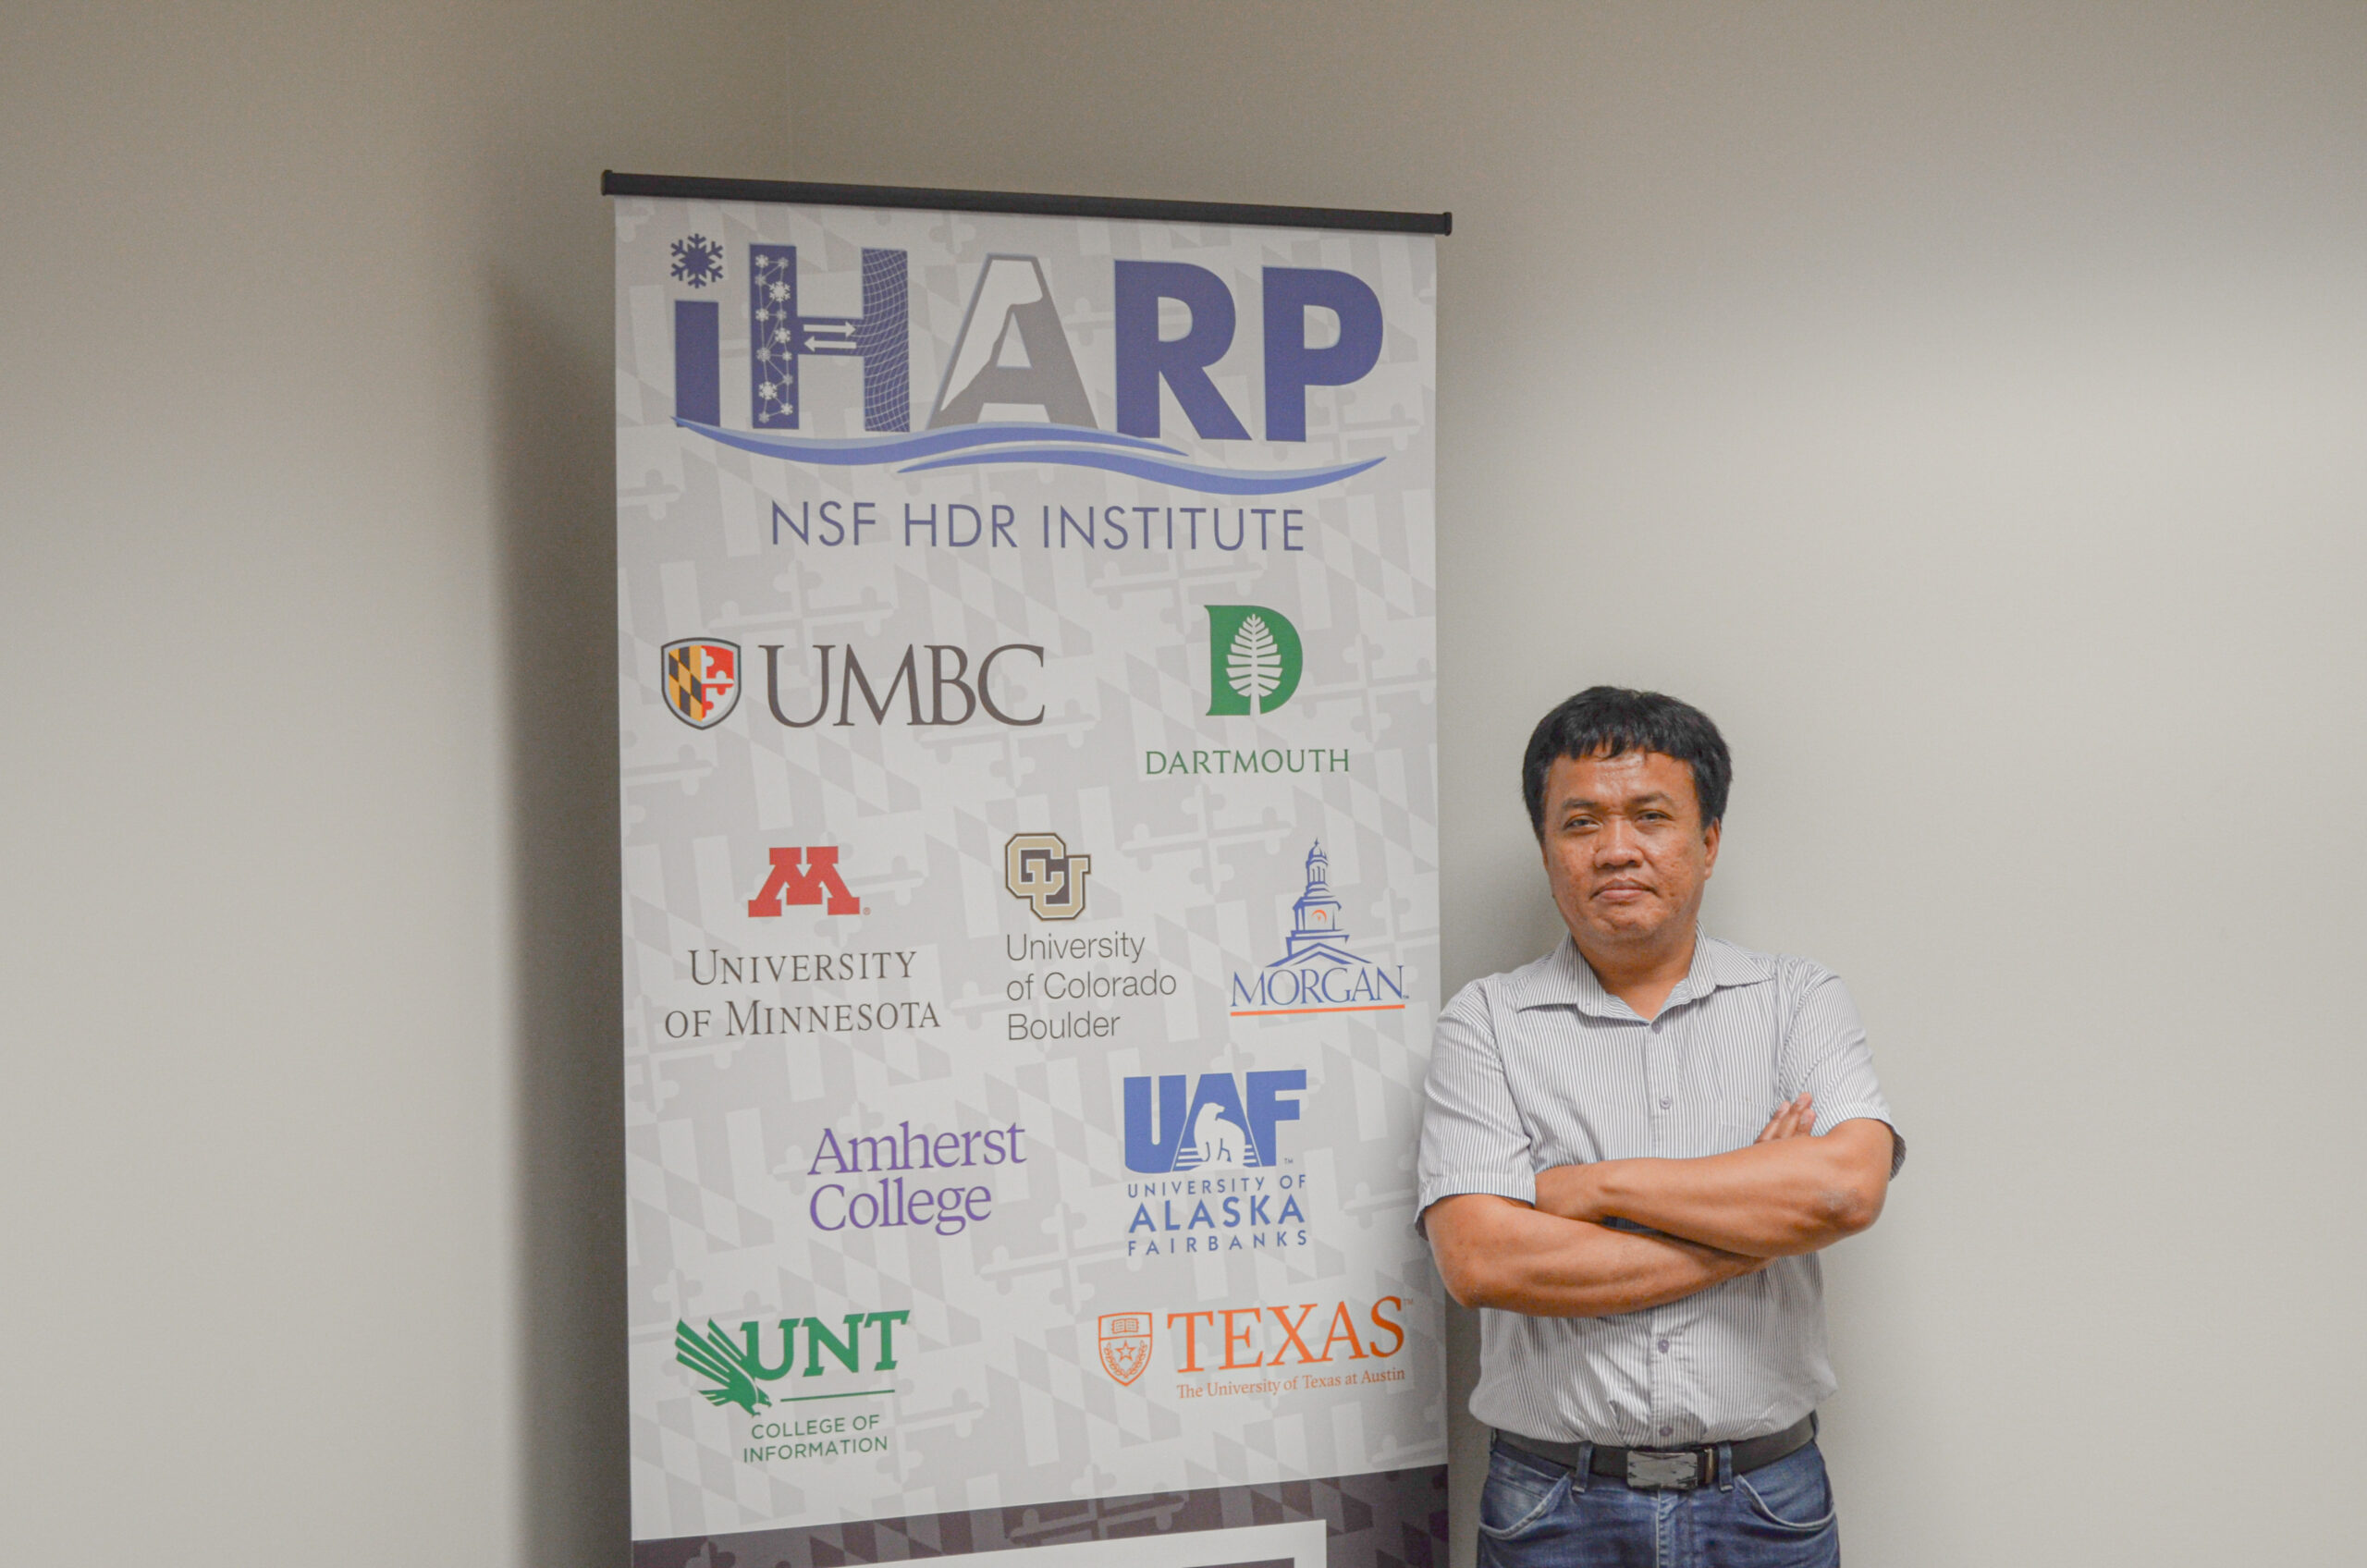 Bayu Adhi Tama standing in front of the iHARP banner